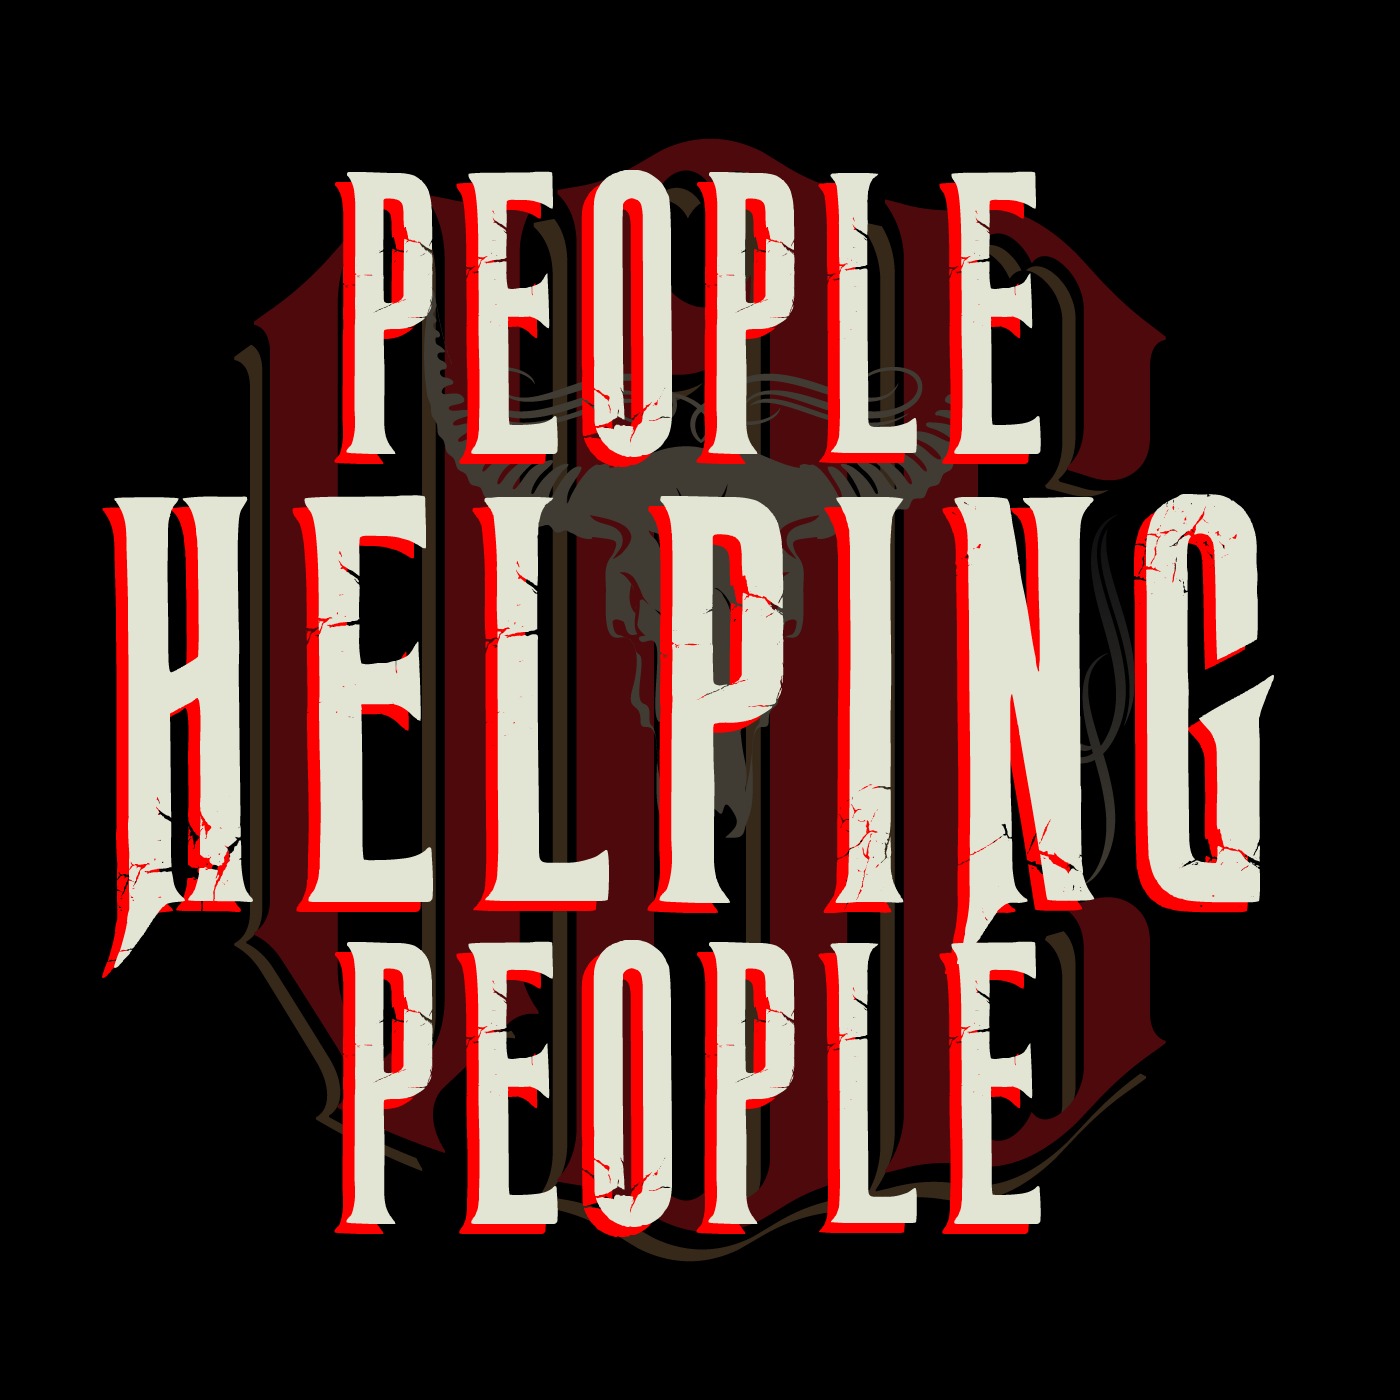 VOC EPISODE 33: - PEOPLE HELPING PEOPLE